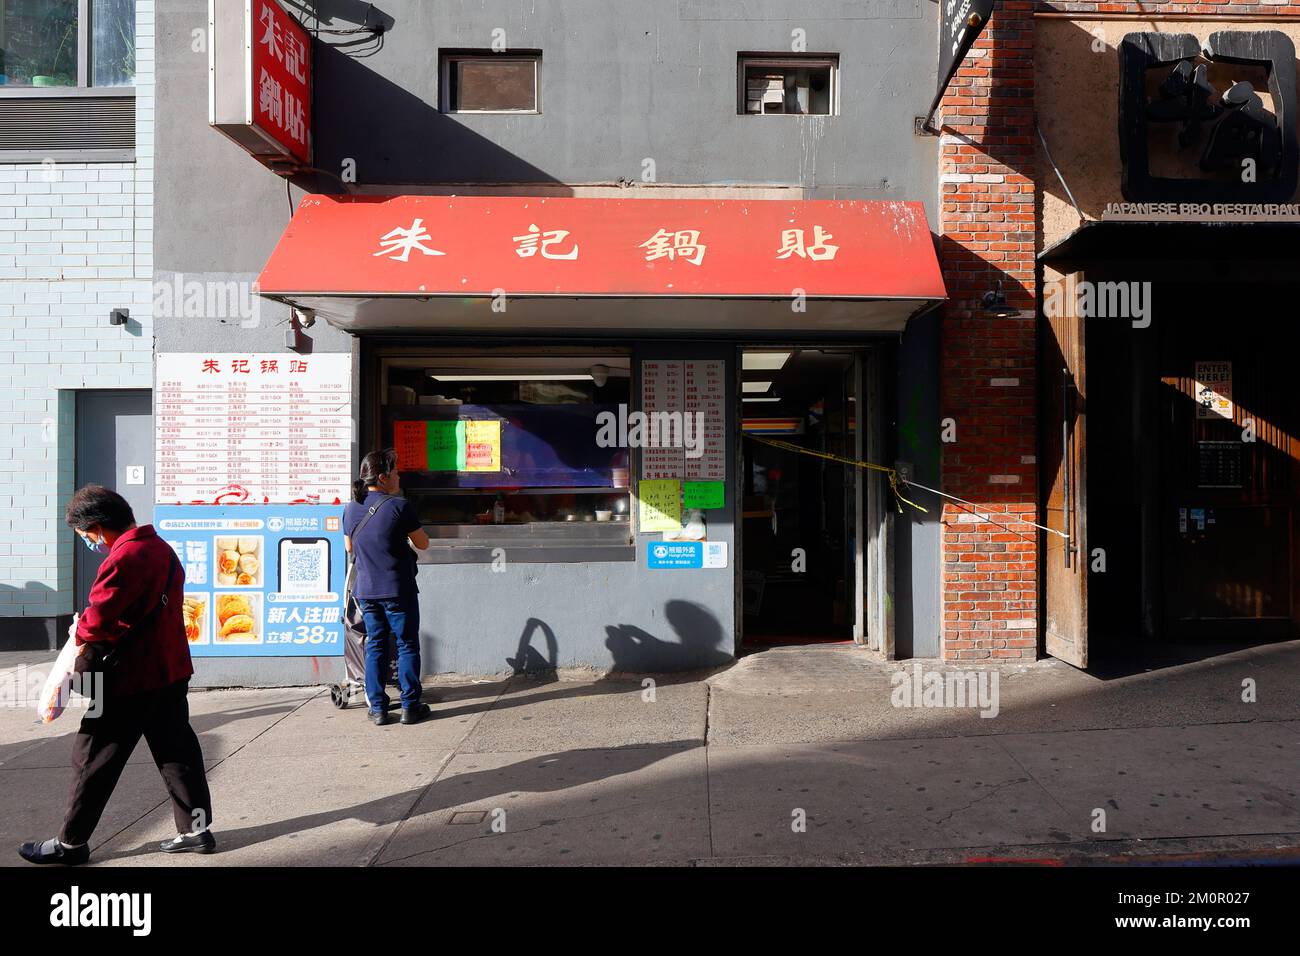 Zhu Ji Dumpling House 朱記鍋貼, 40-52 Main St, Queens, Nueva York, Nueva York, Nueva York, Nueva York, foto del escaparate de una tienda de dumpling frito chino en el centro de Flushing. Foto de stock